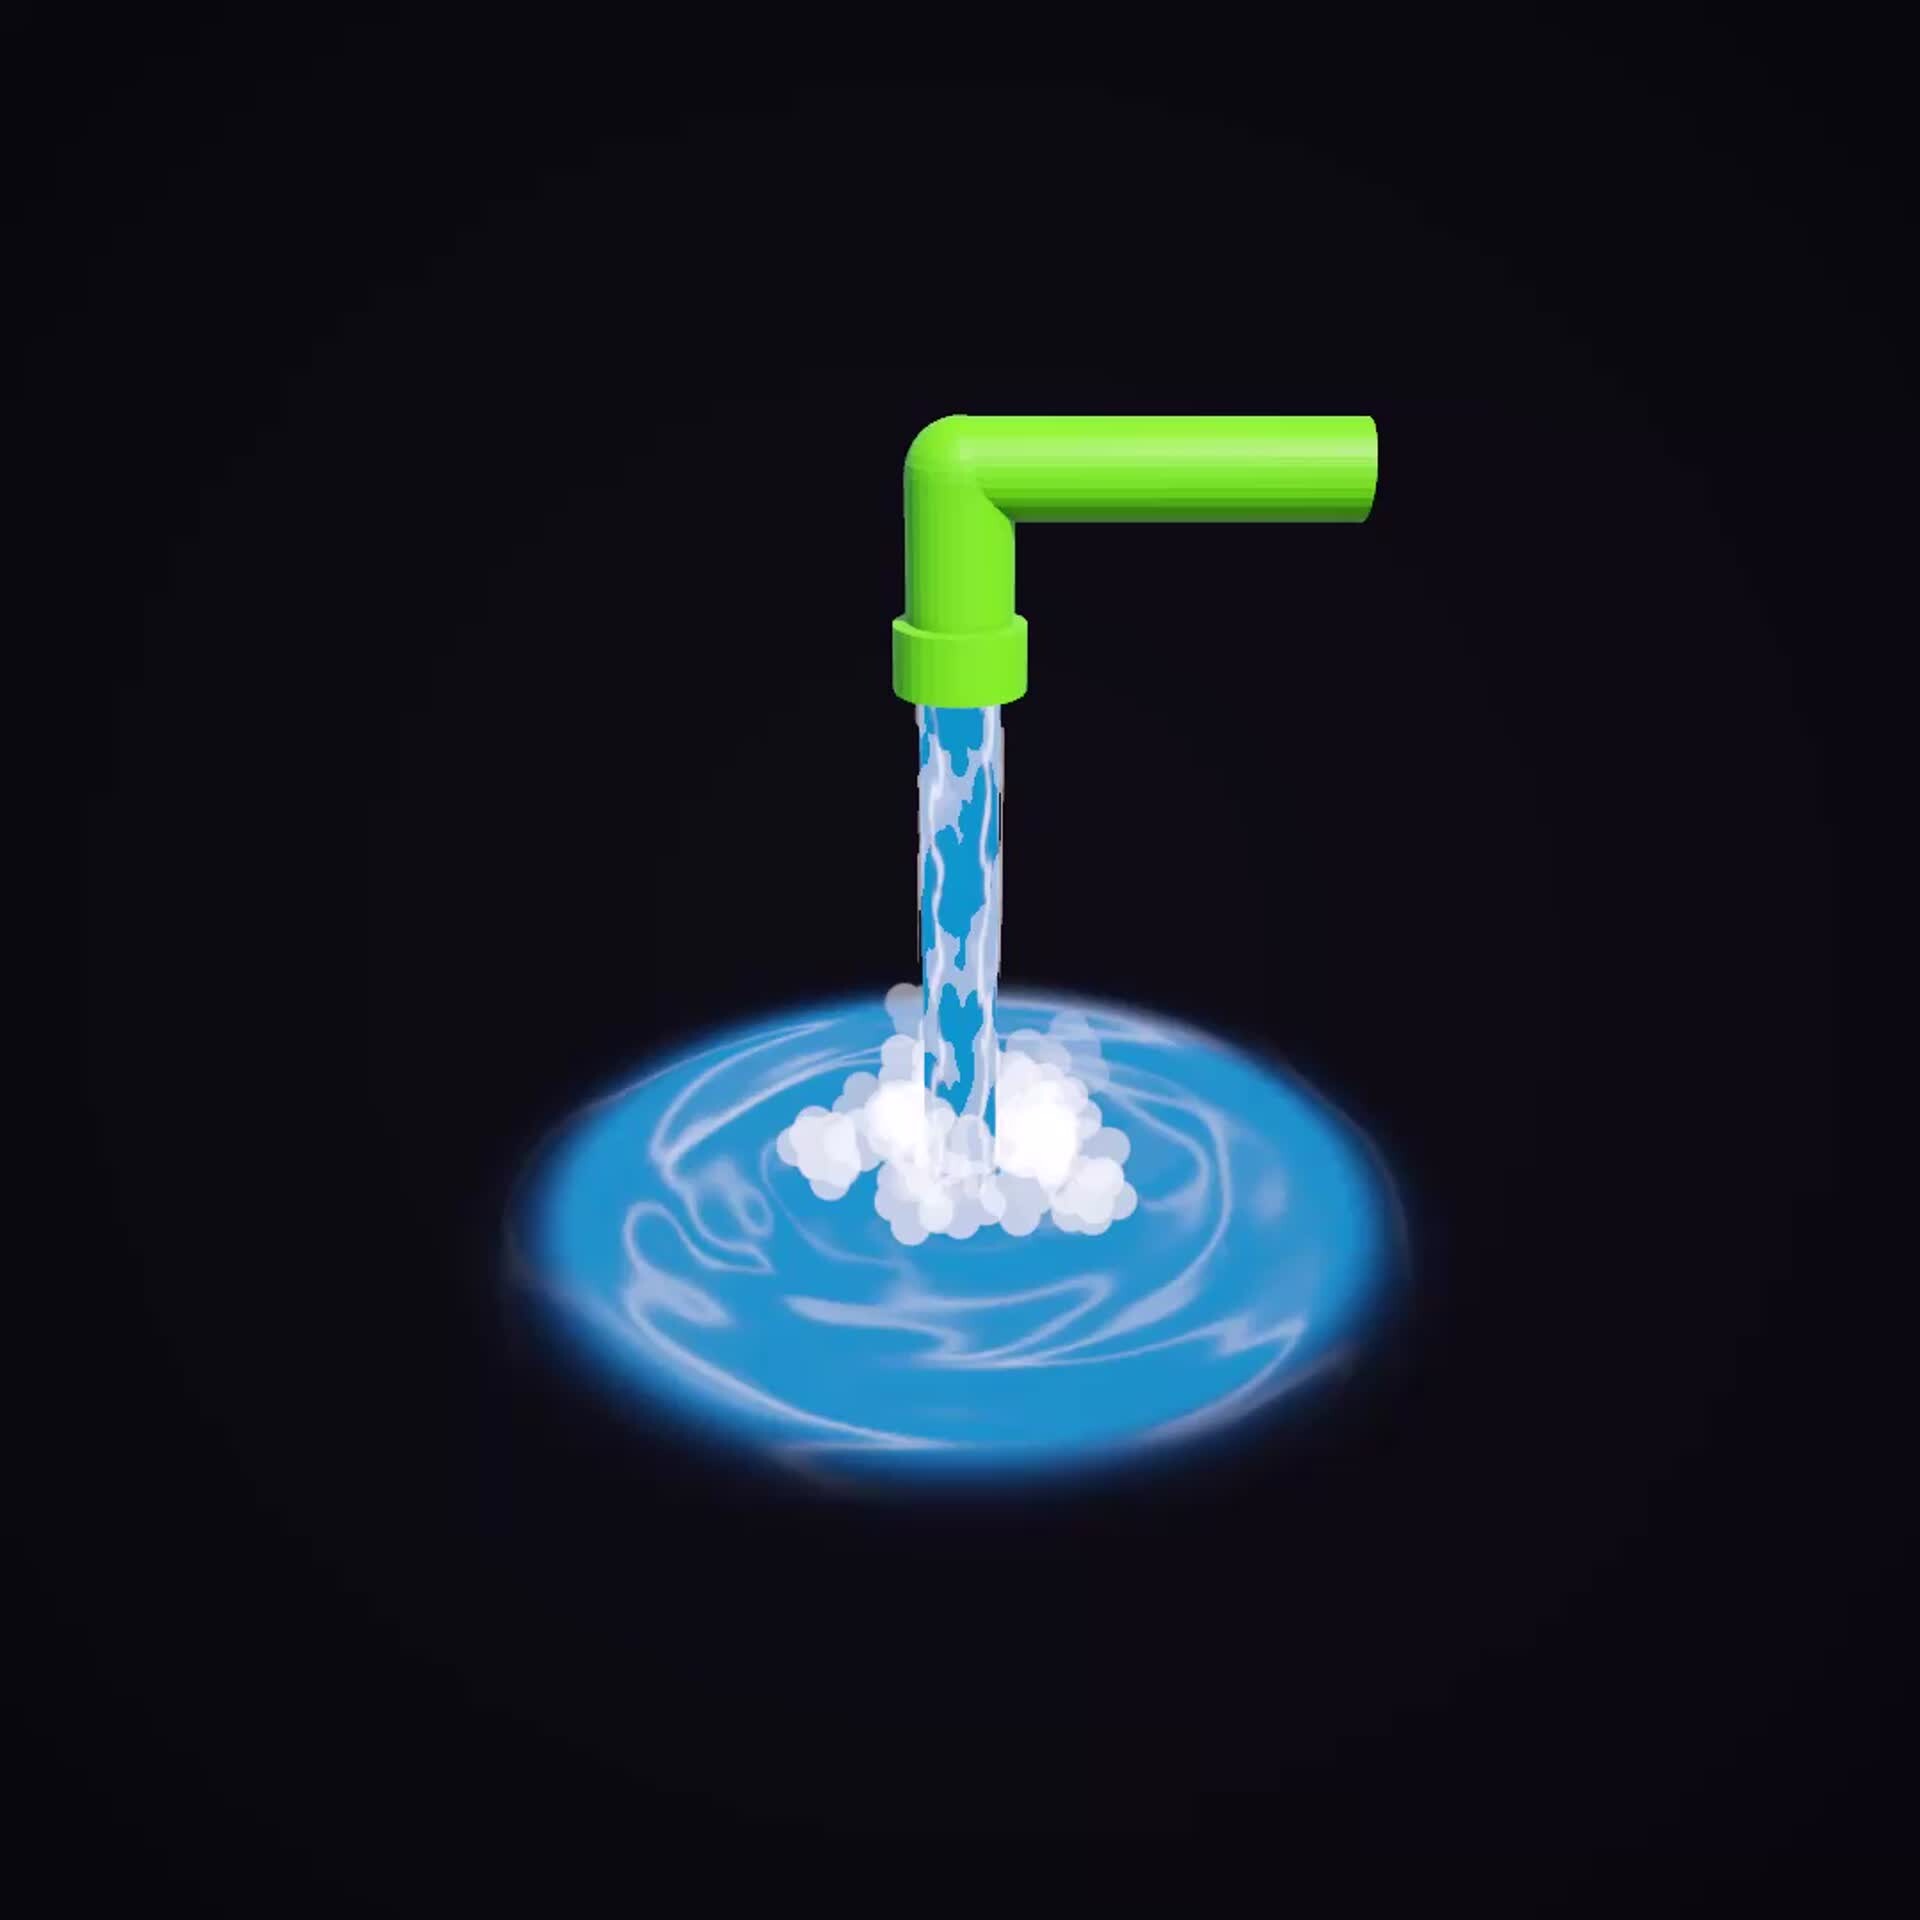 ArtStation - Tap Water VFX